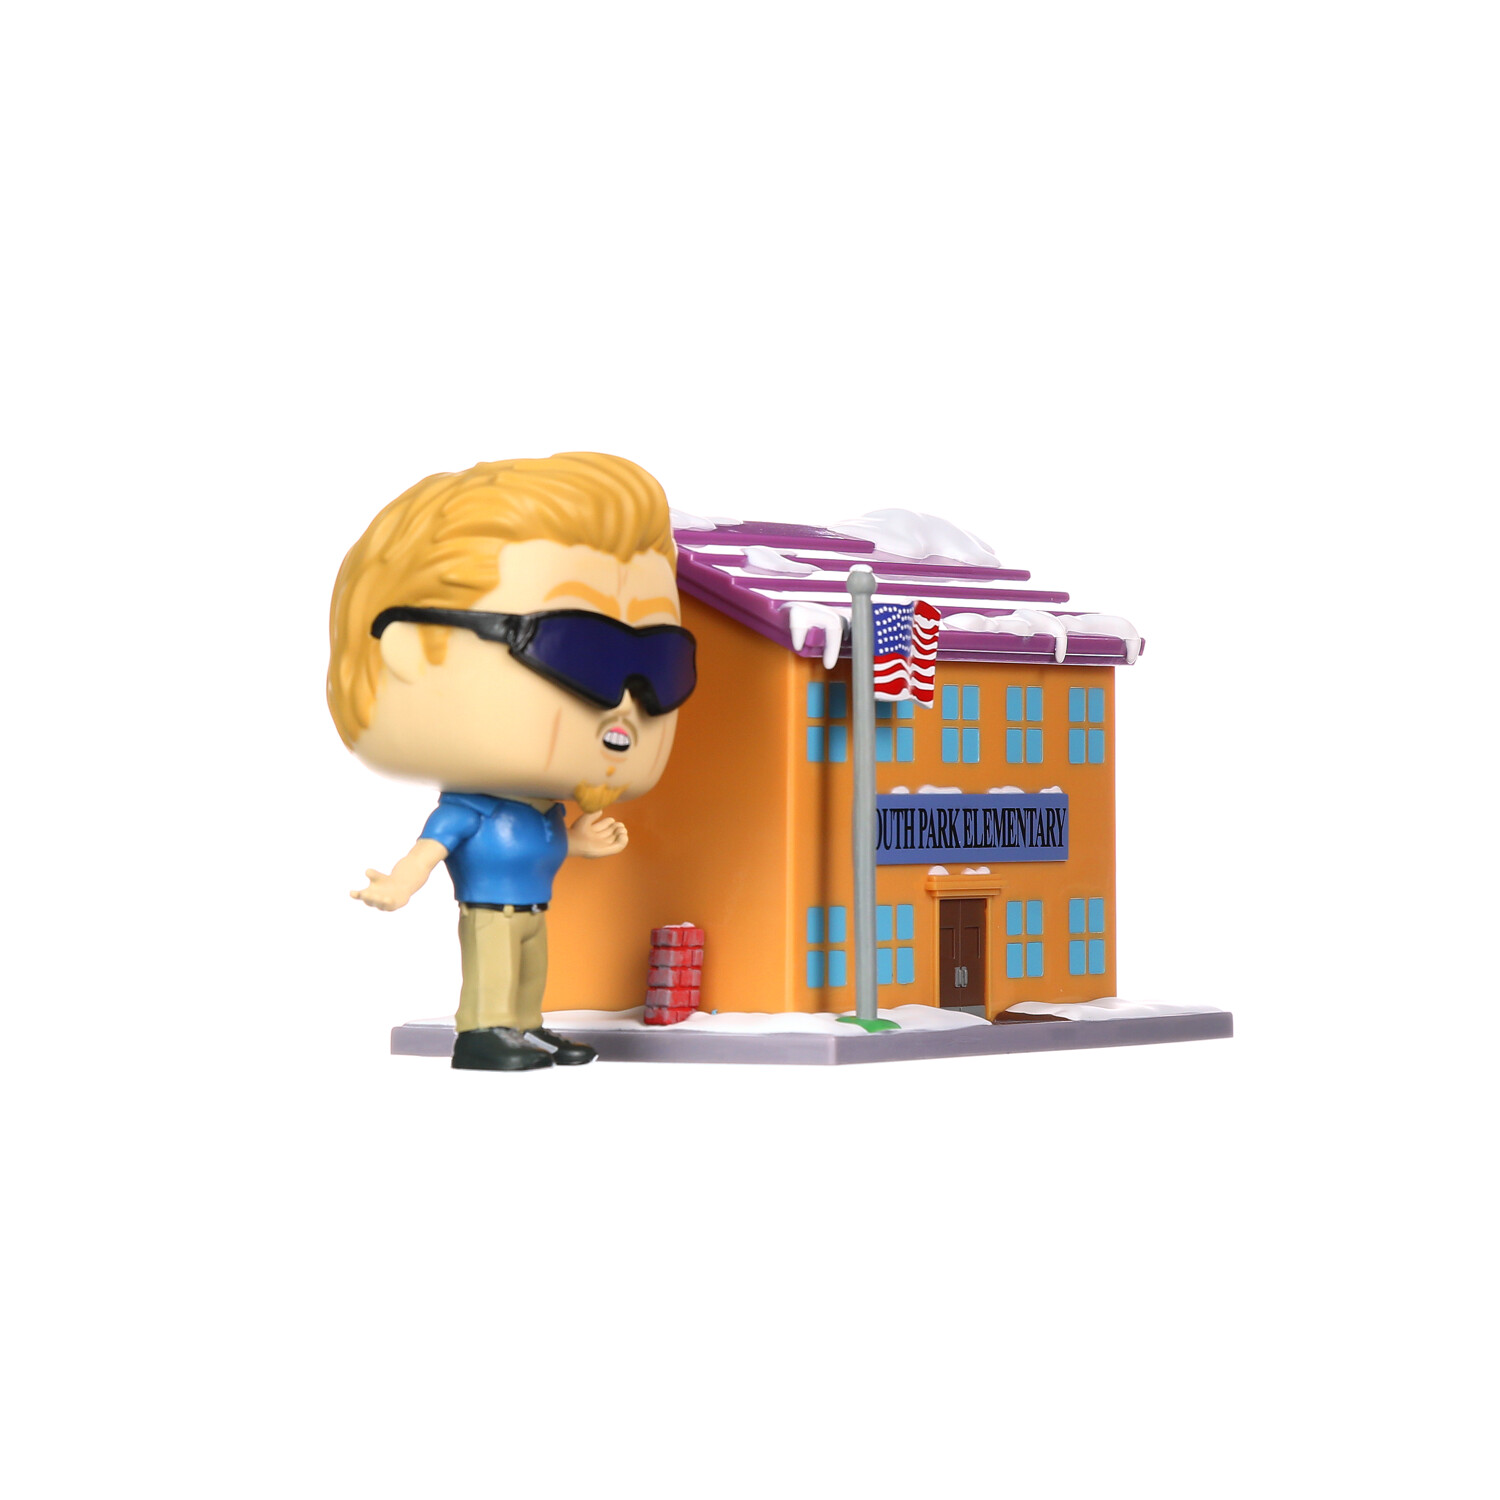  POP Funko Pop! Town: South Park - South Park Elementary w/ PC  Principal, Multicolor, 51632 : Funko: Toys & Games